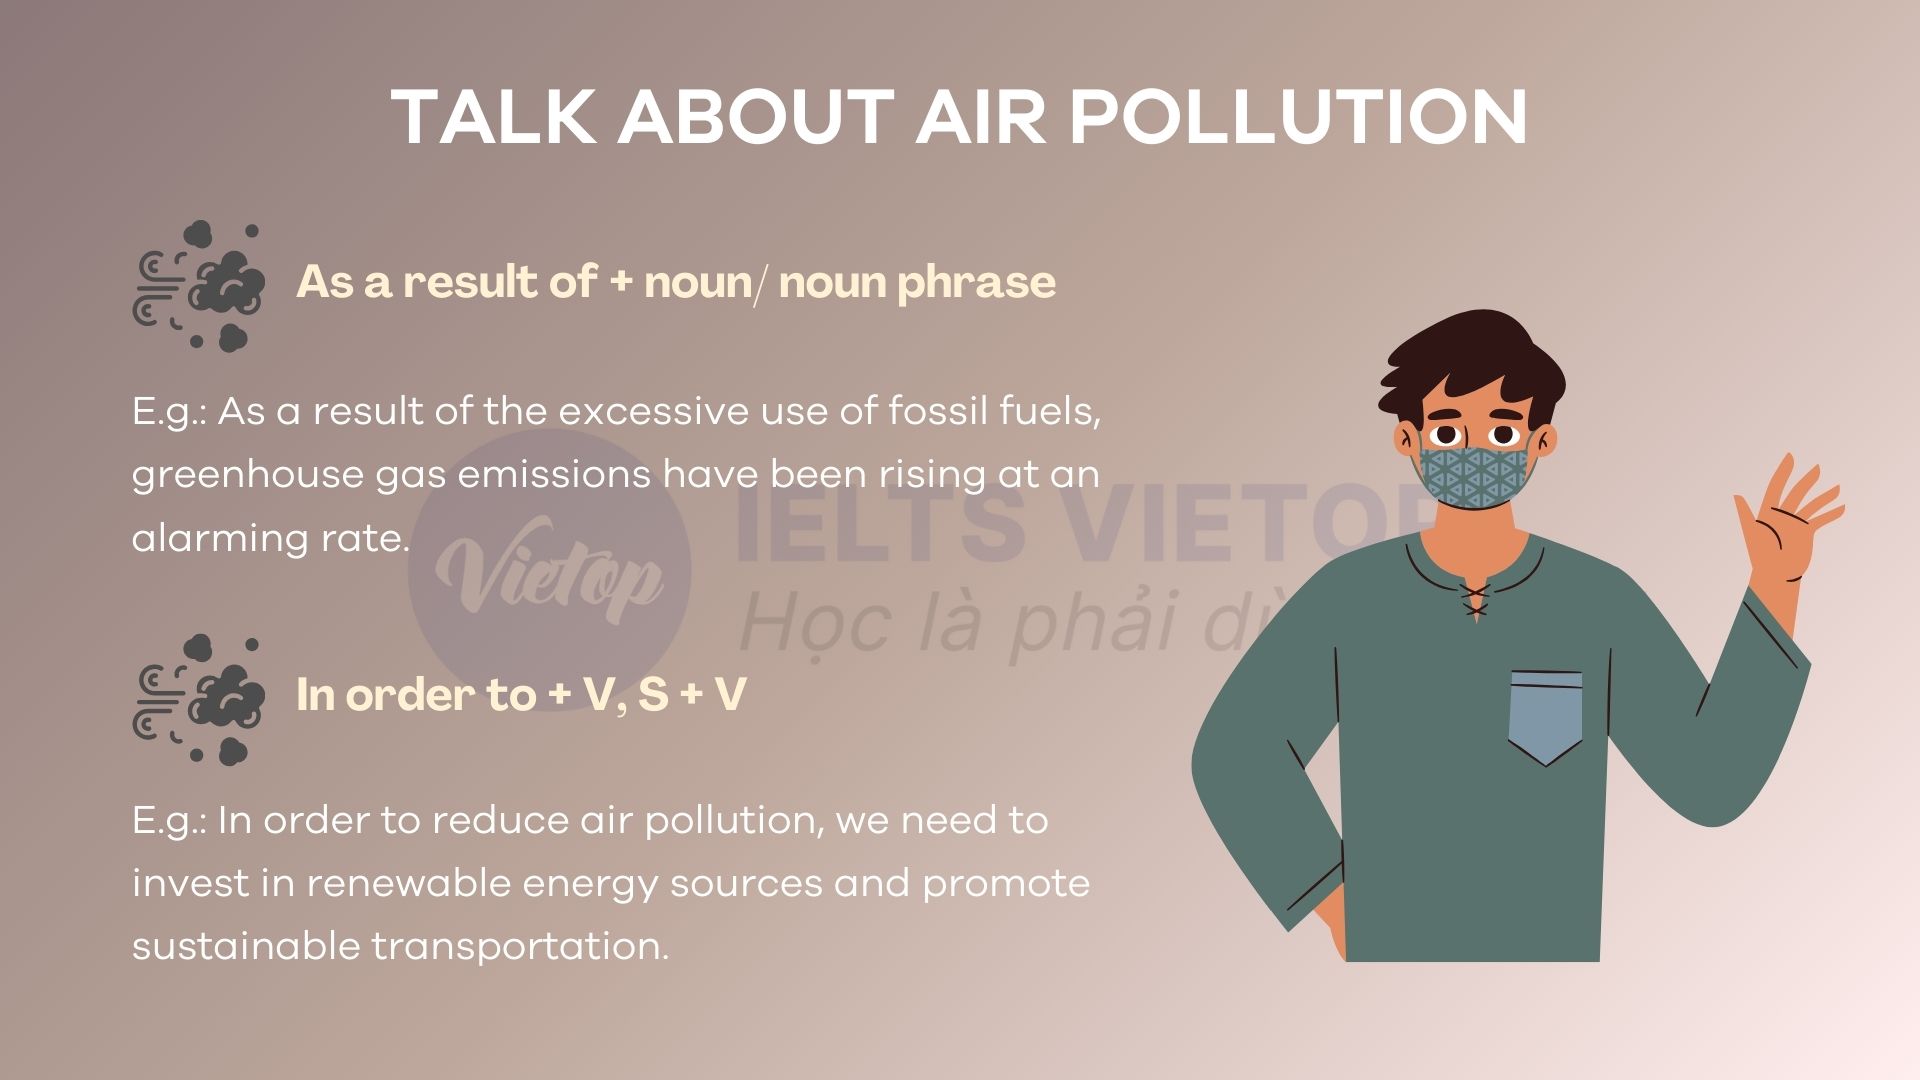 Cấu trúc sử dụng cho chủ đề talk about air pollution